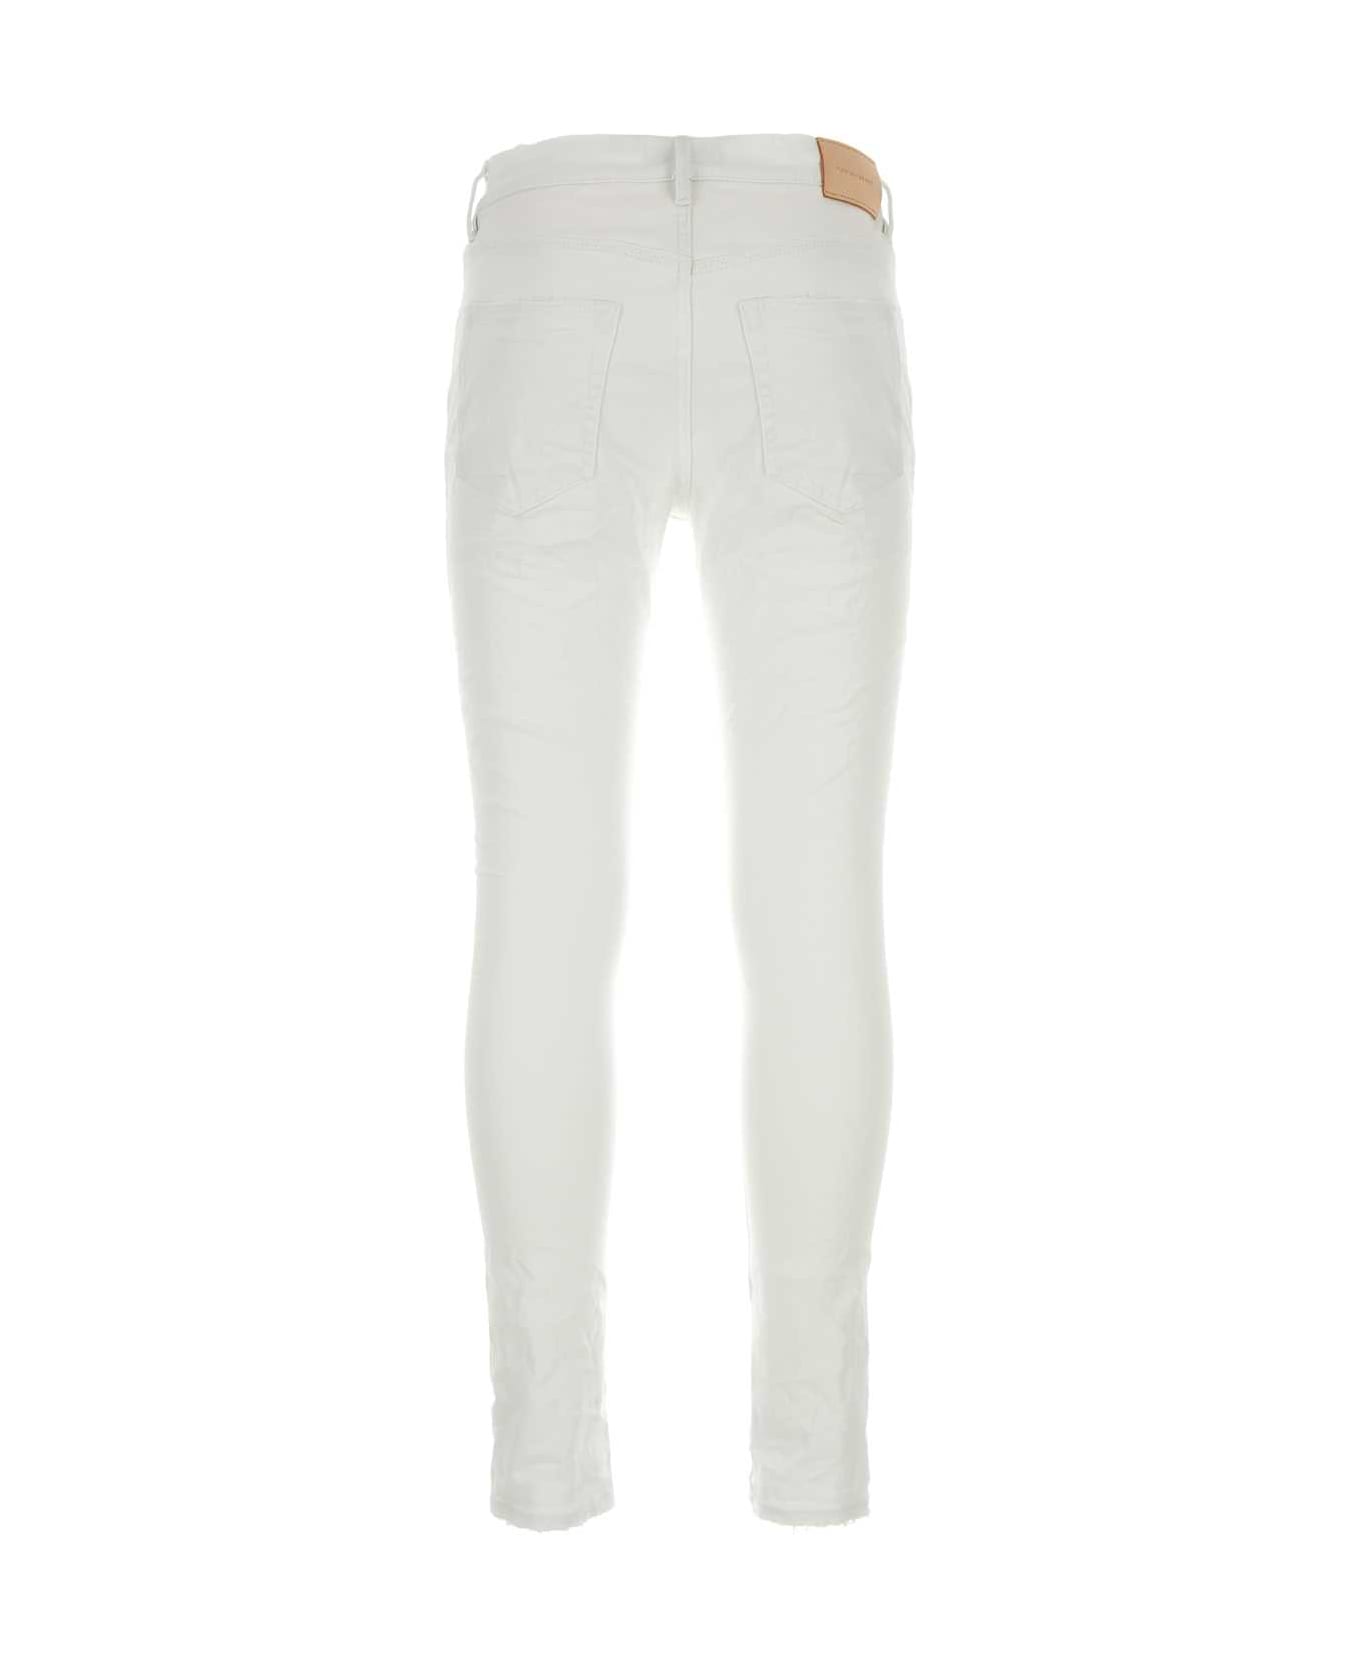 Purple Brand White Stretch Denim Jeans - OPTICWHITE